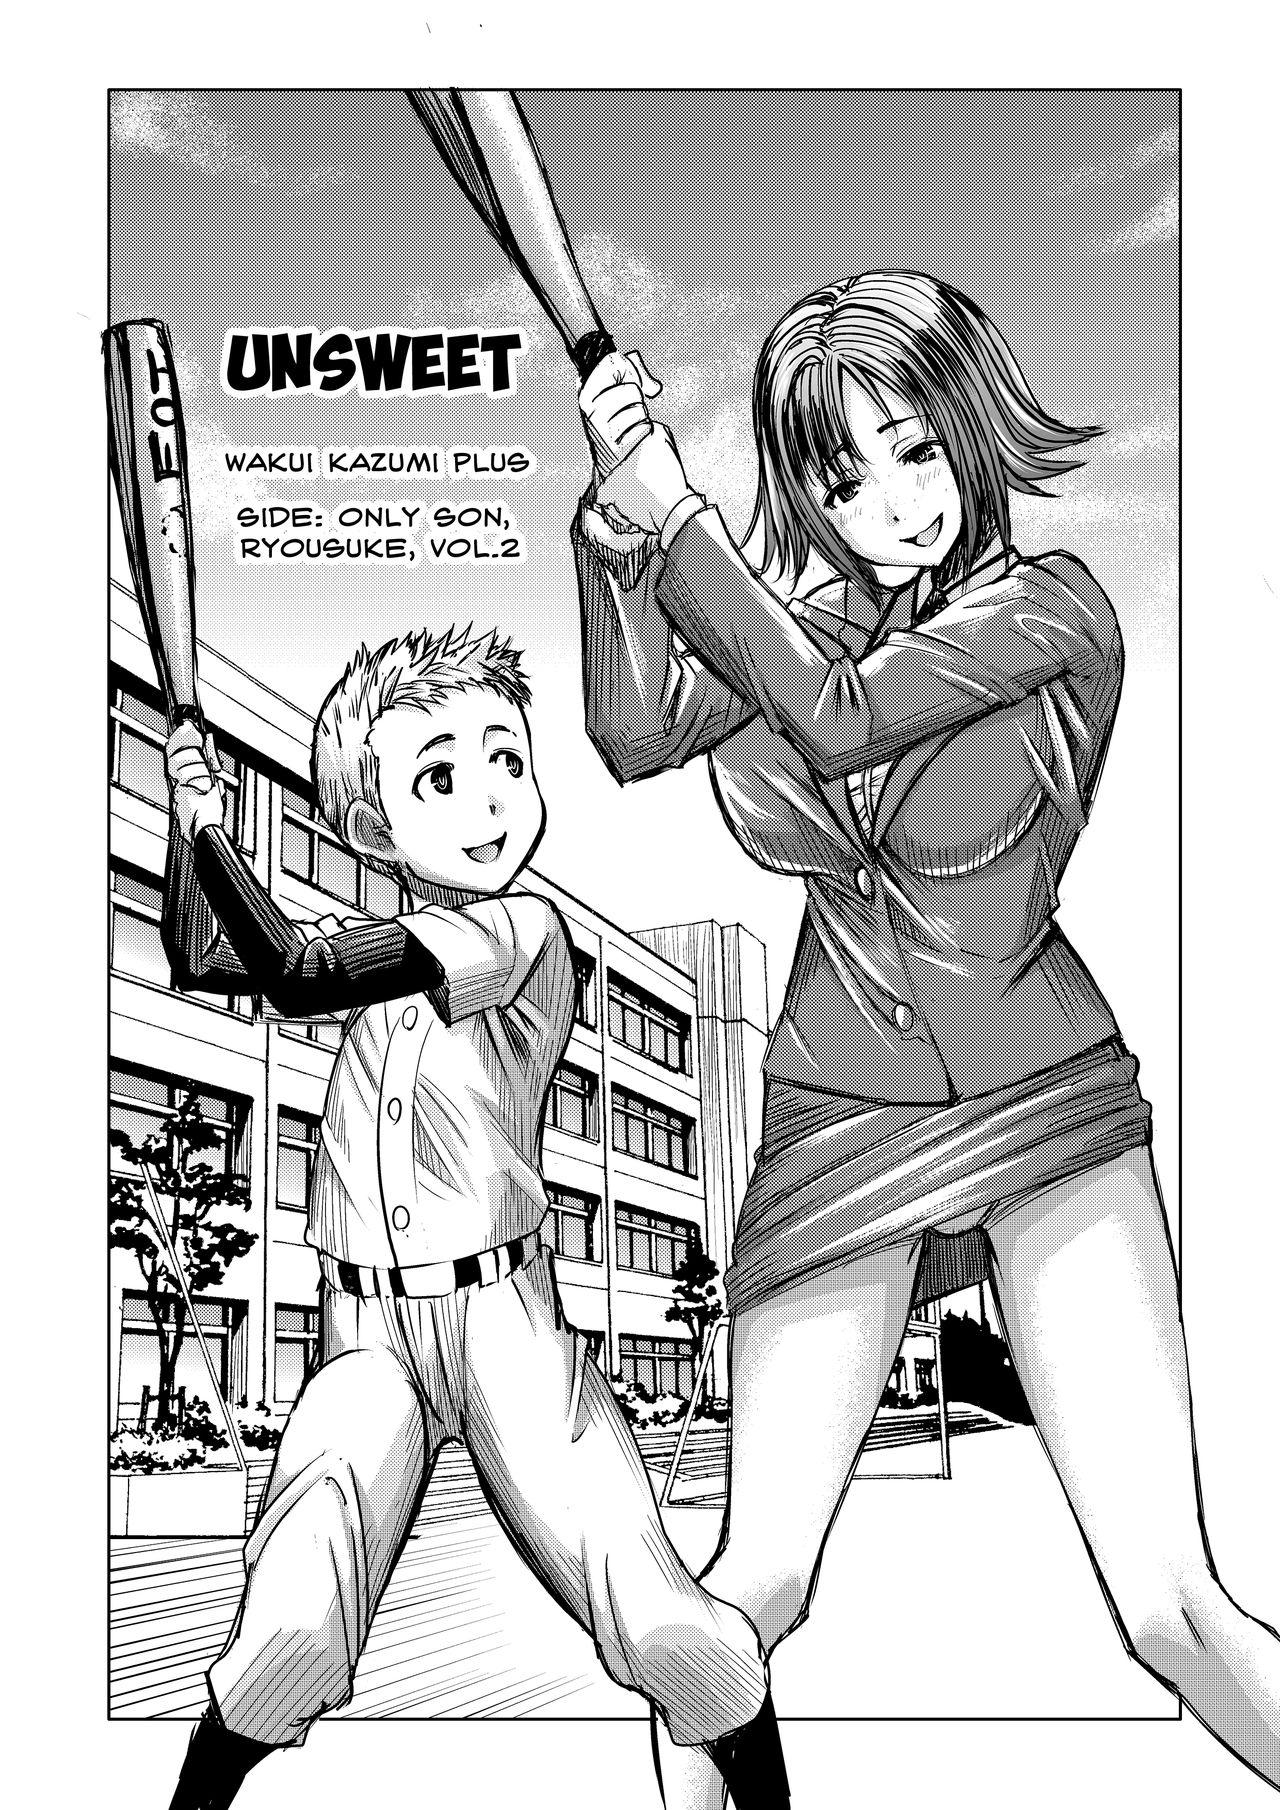 Unsweet Haha Kazumi Wakui Plus SIDE Hitori Musuko Ryosuke vol.2 2